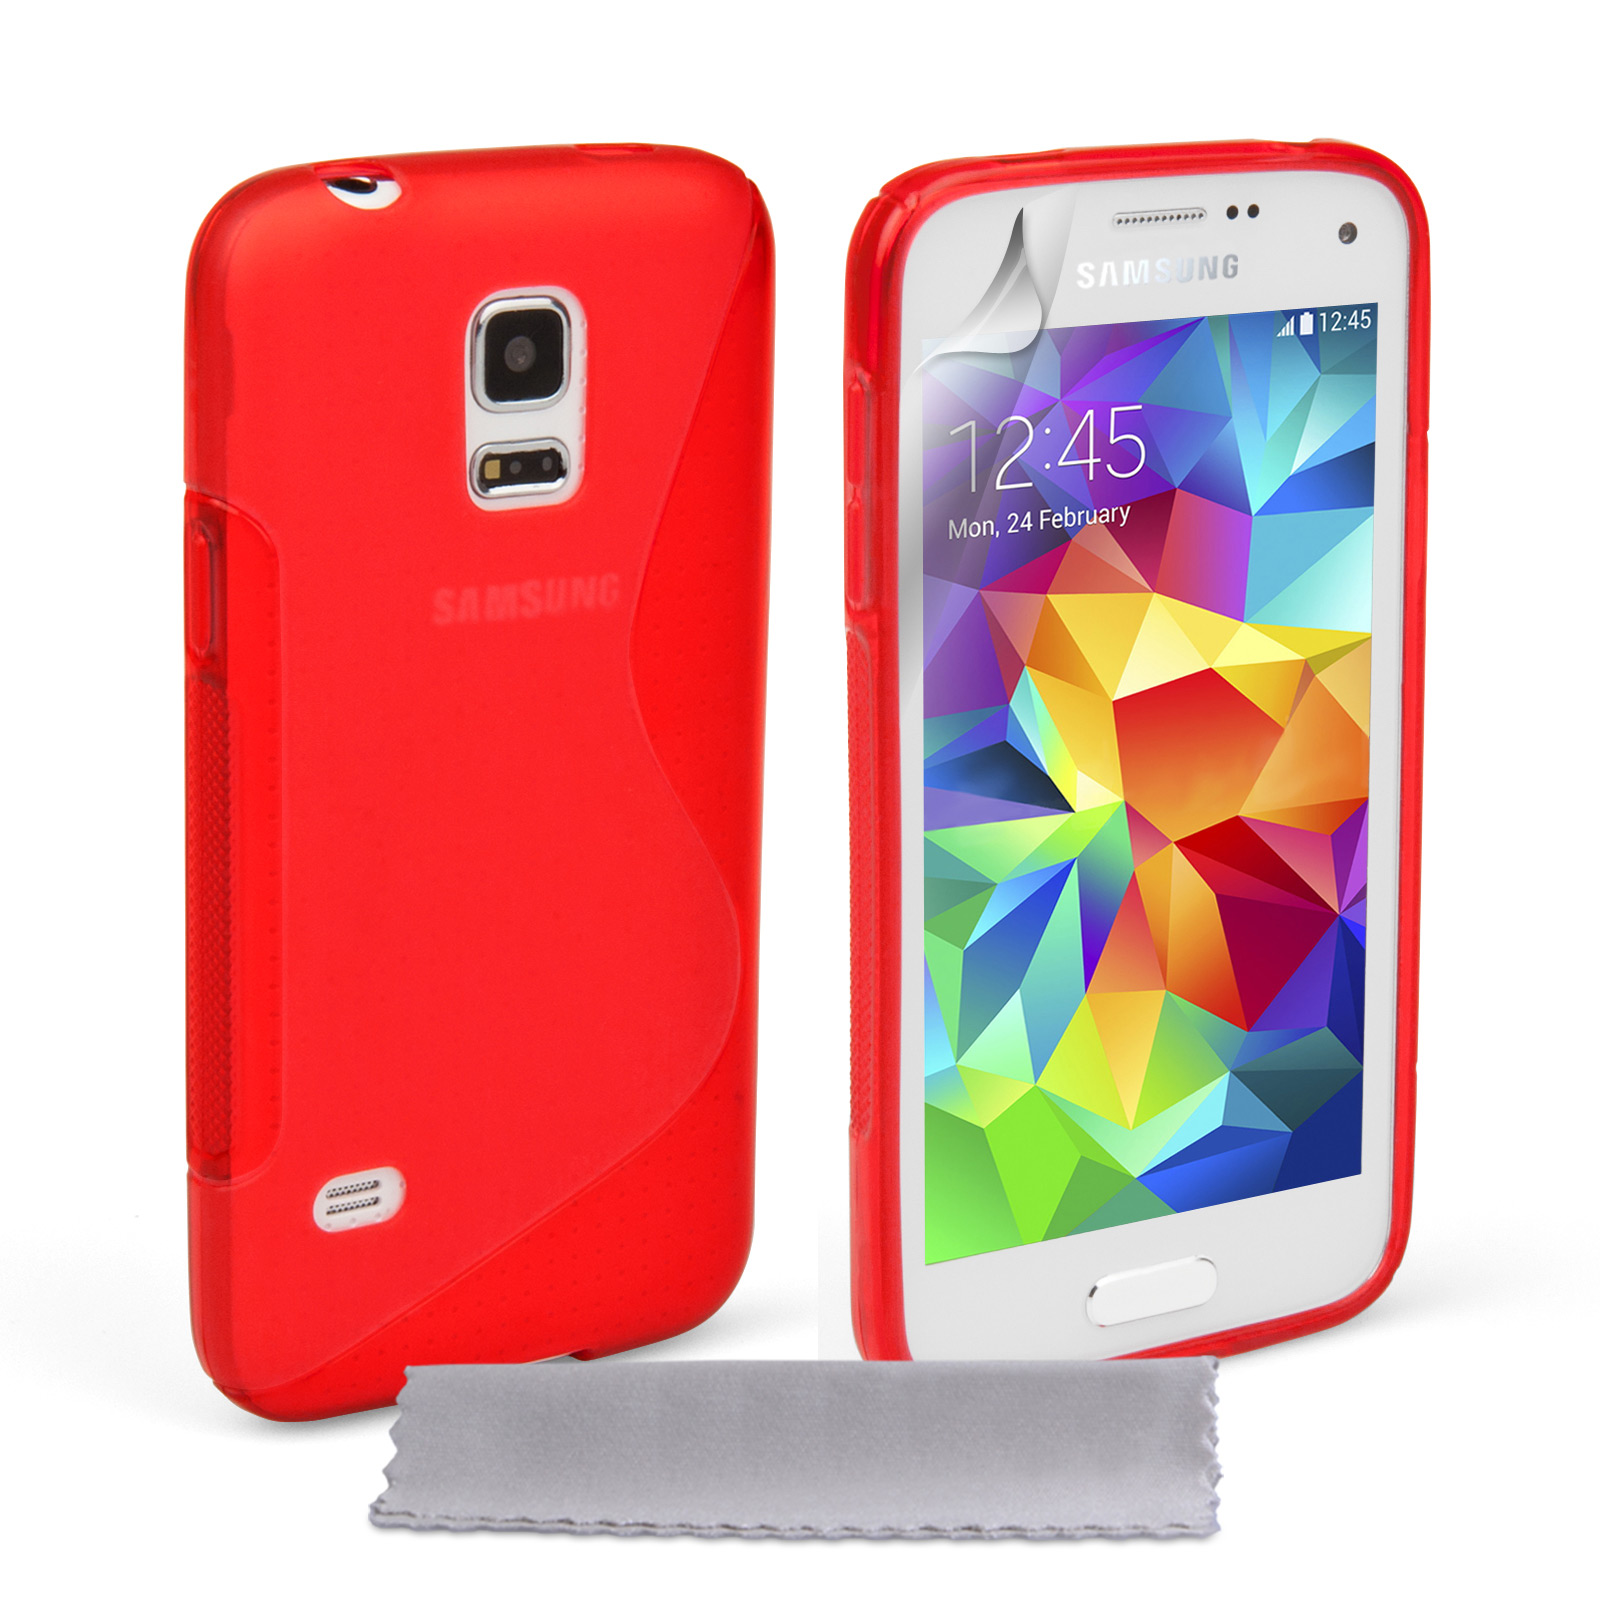 Caseflex Samsung Galaxy S5 Mini Silicone Gel S-Line Case - Red